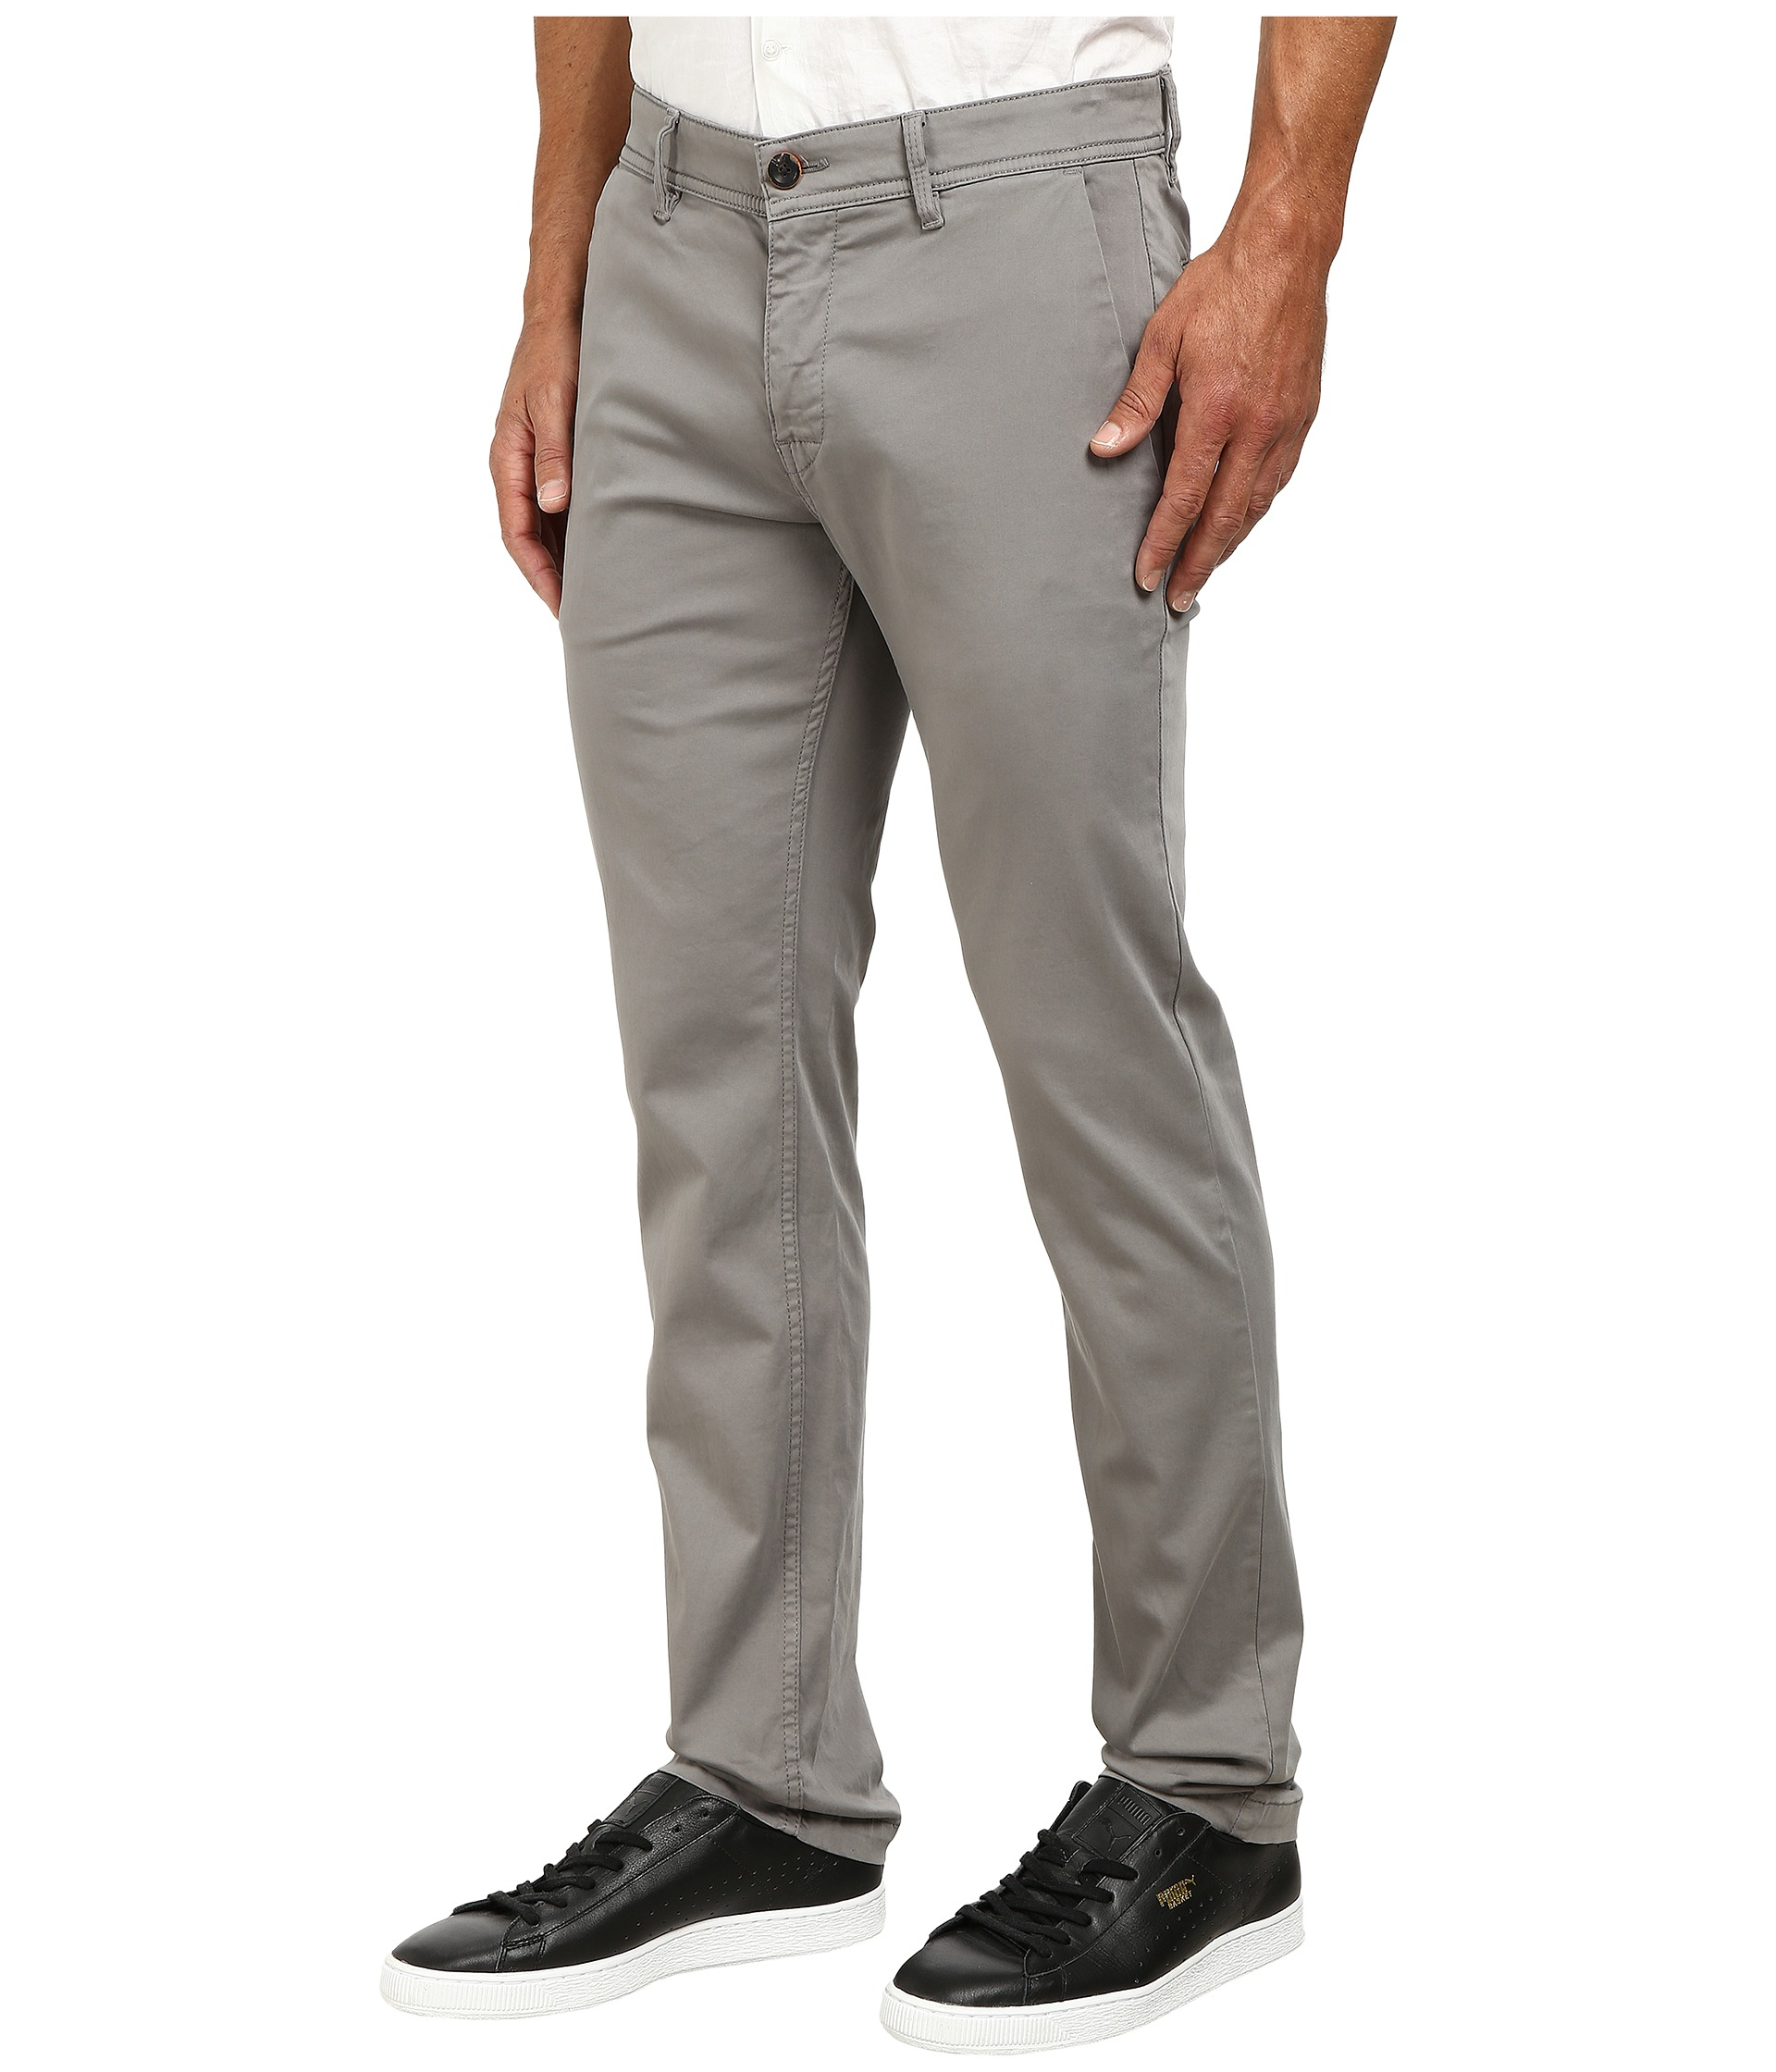 Lyst - BOSS Orange Schino-slim1-d Slim Fit Chino Trousers in Gray for Men